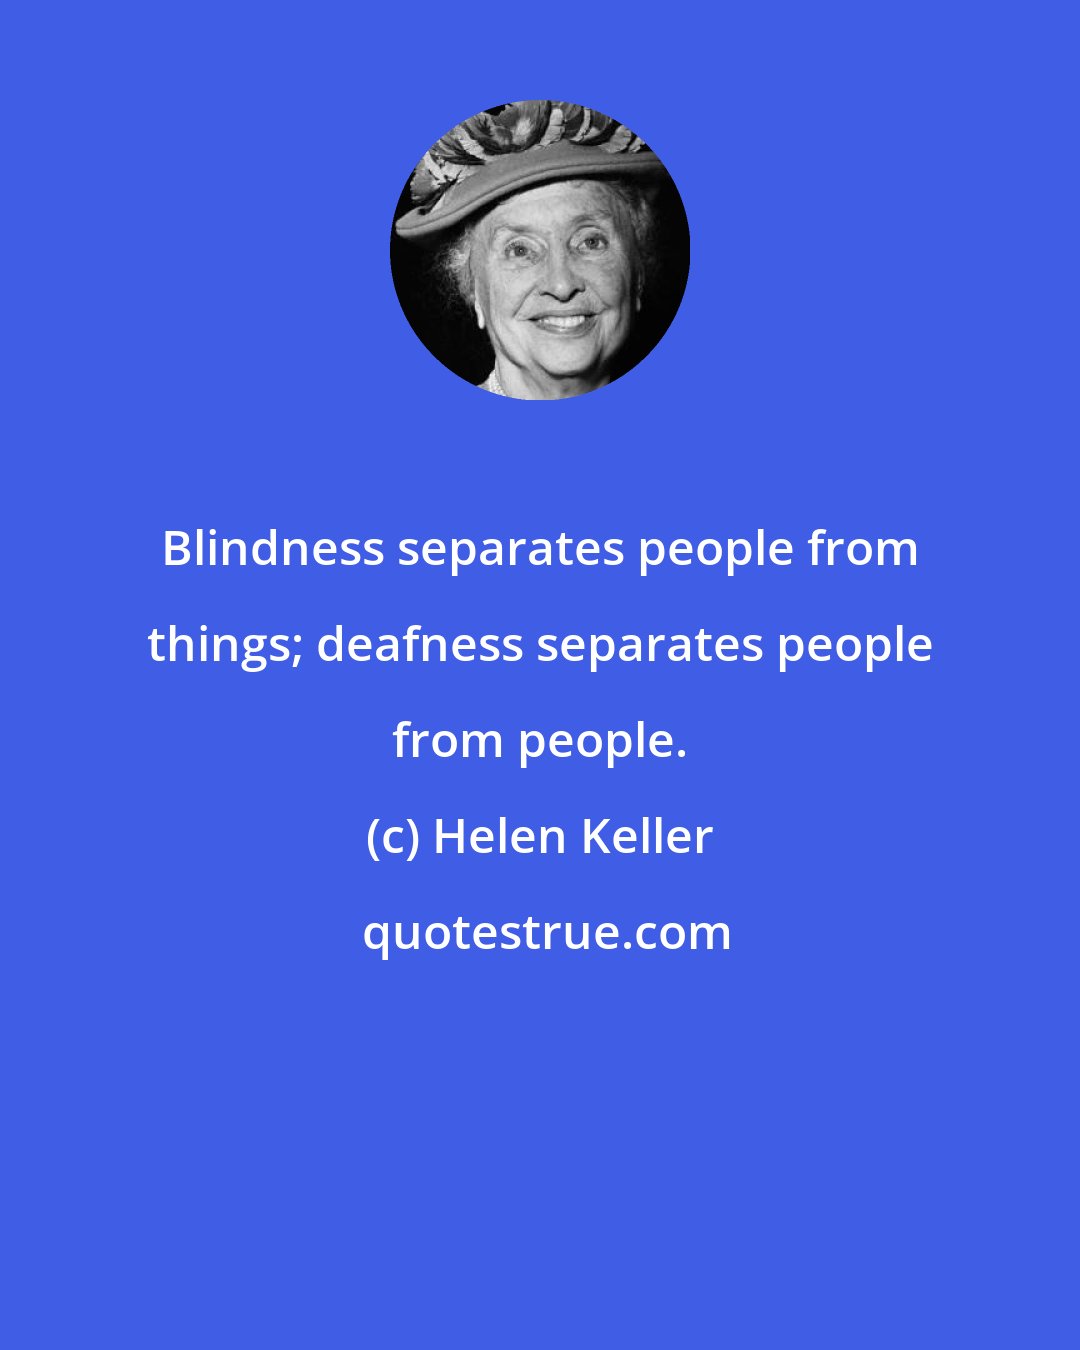 Helen Keller: Blindness separates people from things; deafness separates people from people.